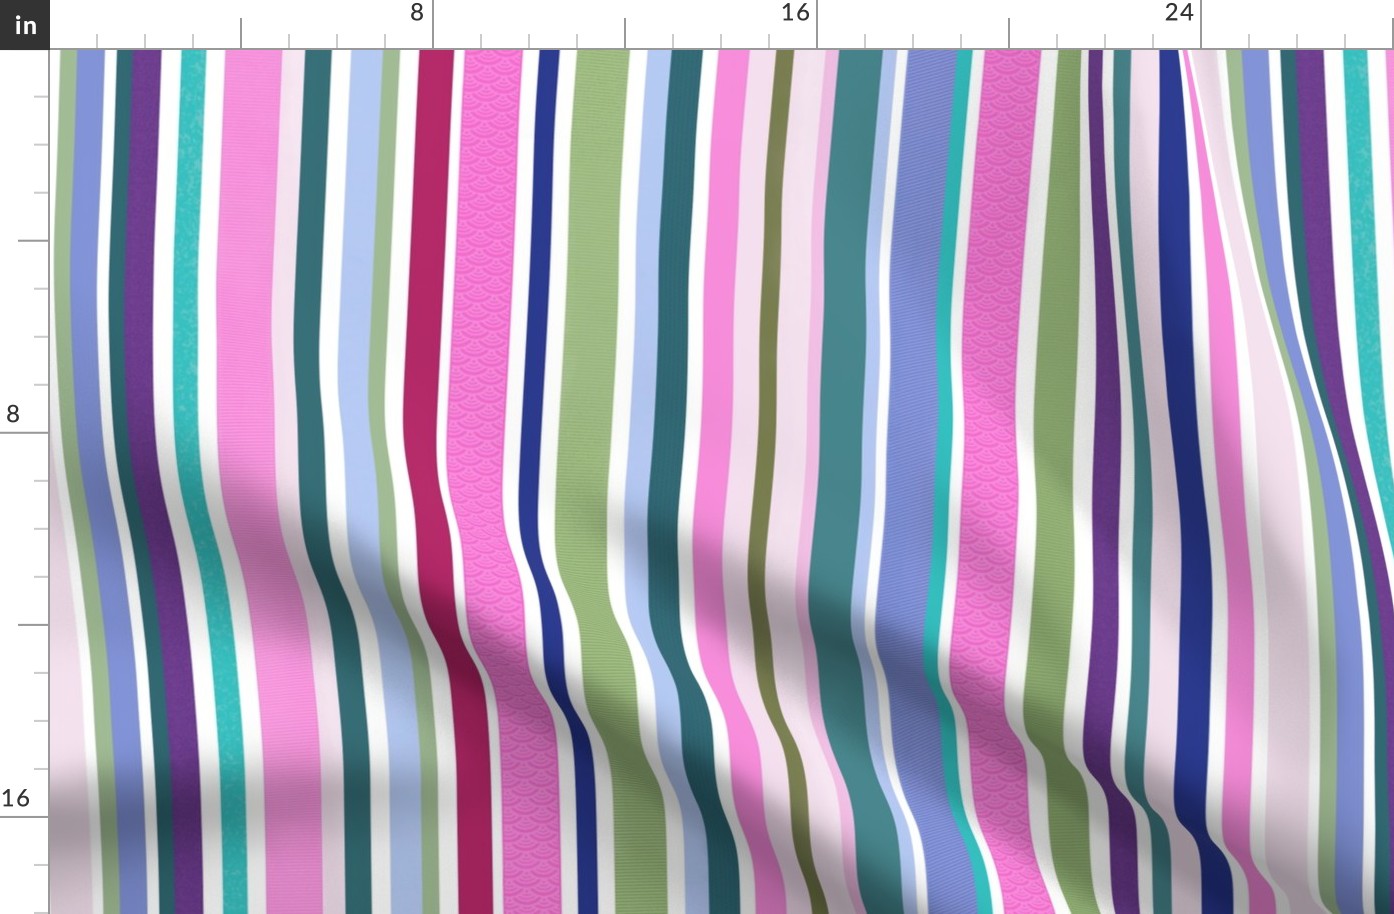 Wallpaper, Duvet, Rainbow, Pastel, Stripe, Stripes, Striped, Pink, Purple, Green, Blue, Aqua, Kids, Girls, Children, Bright, JG_Anchor_Designs, Stripes, Striped #stripes #pastel #rainbow #girls #wallpaper #duvet #tablecloth